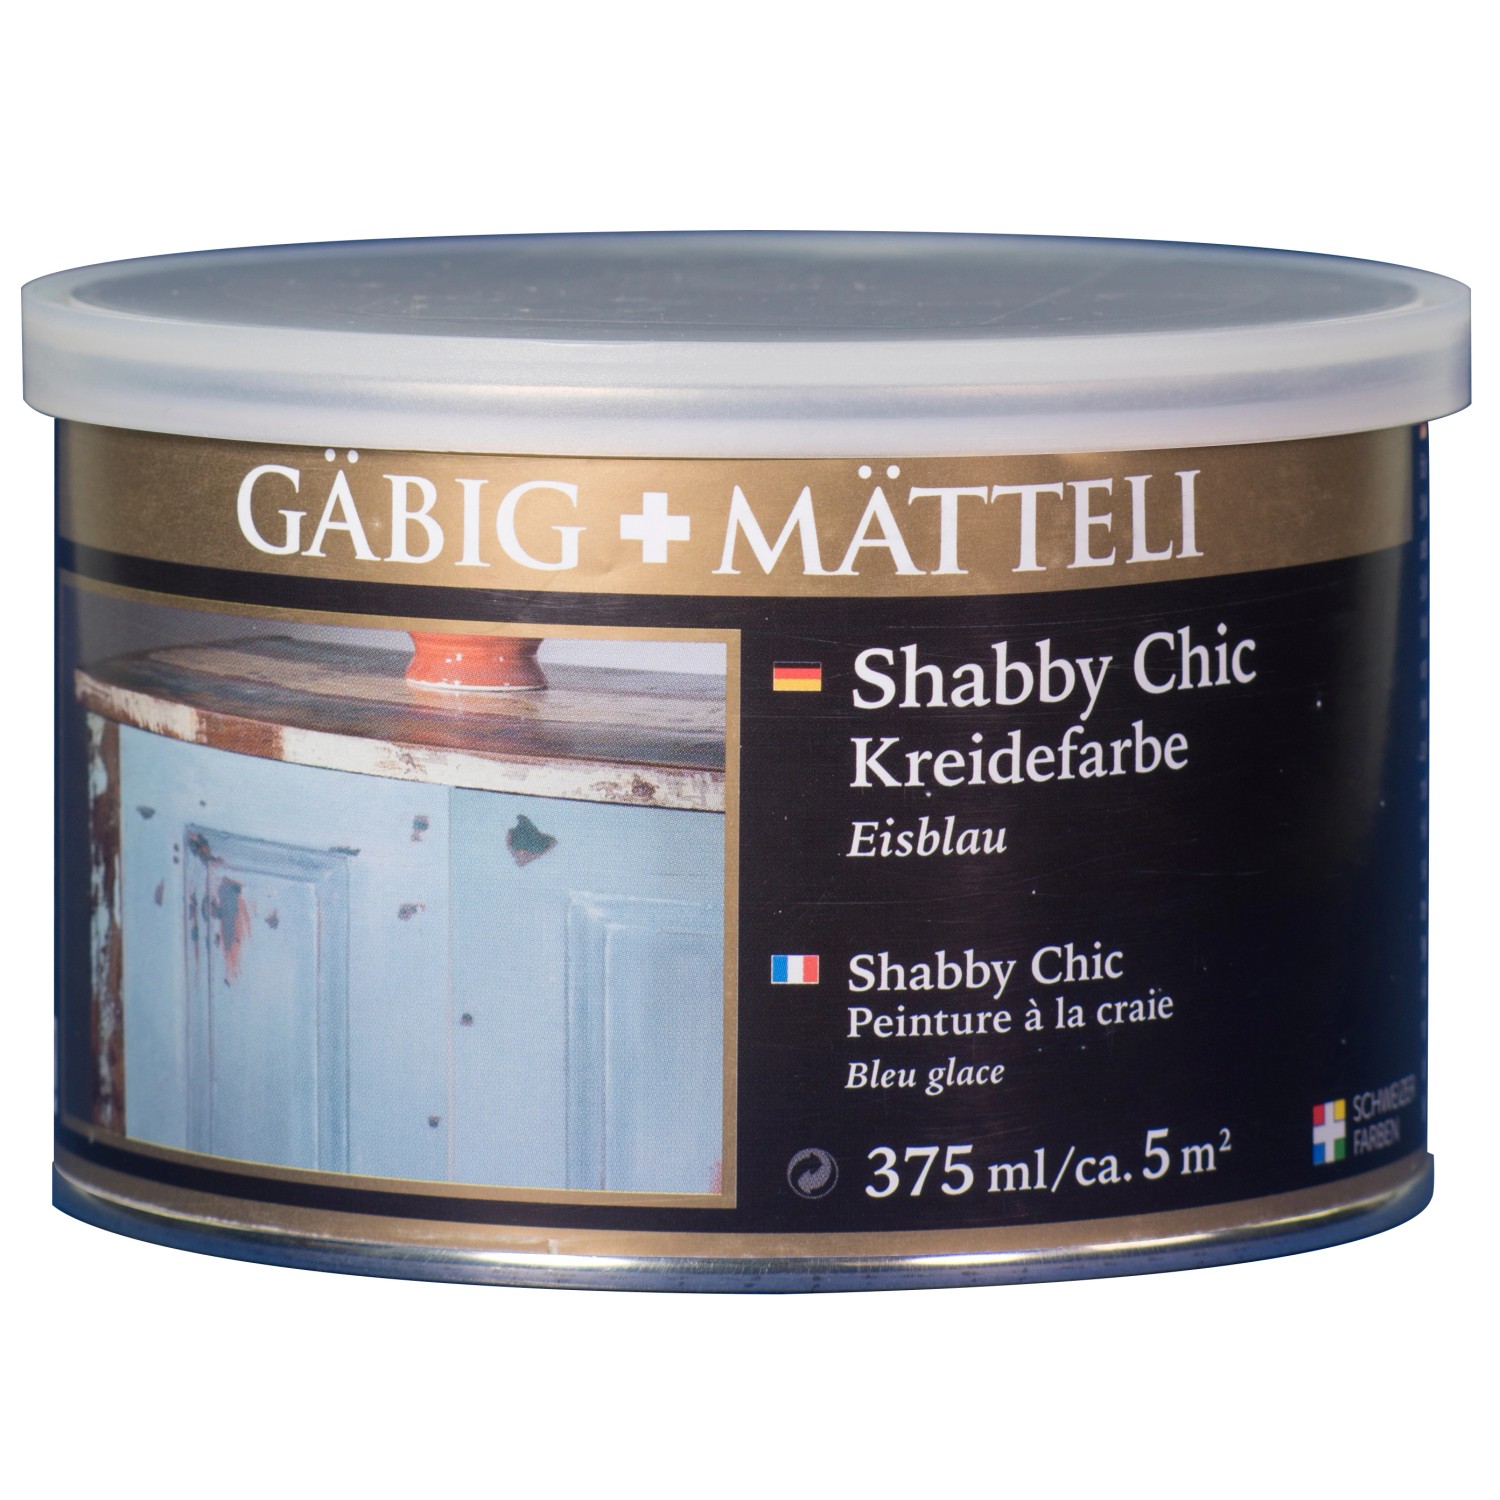 Gäbig+Mätteli Shabby Chic Kreidefarbe Eisblau matt 375 ml von Gäbig+Mätteli